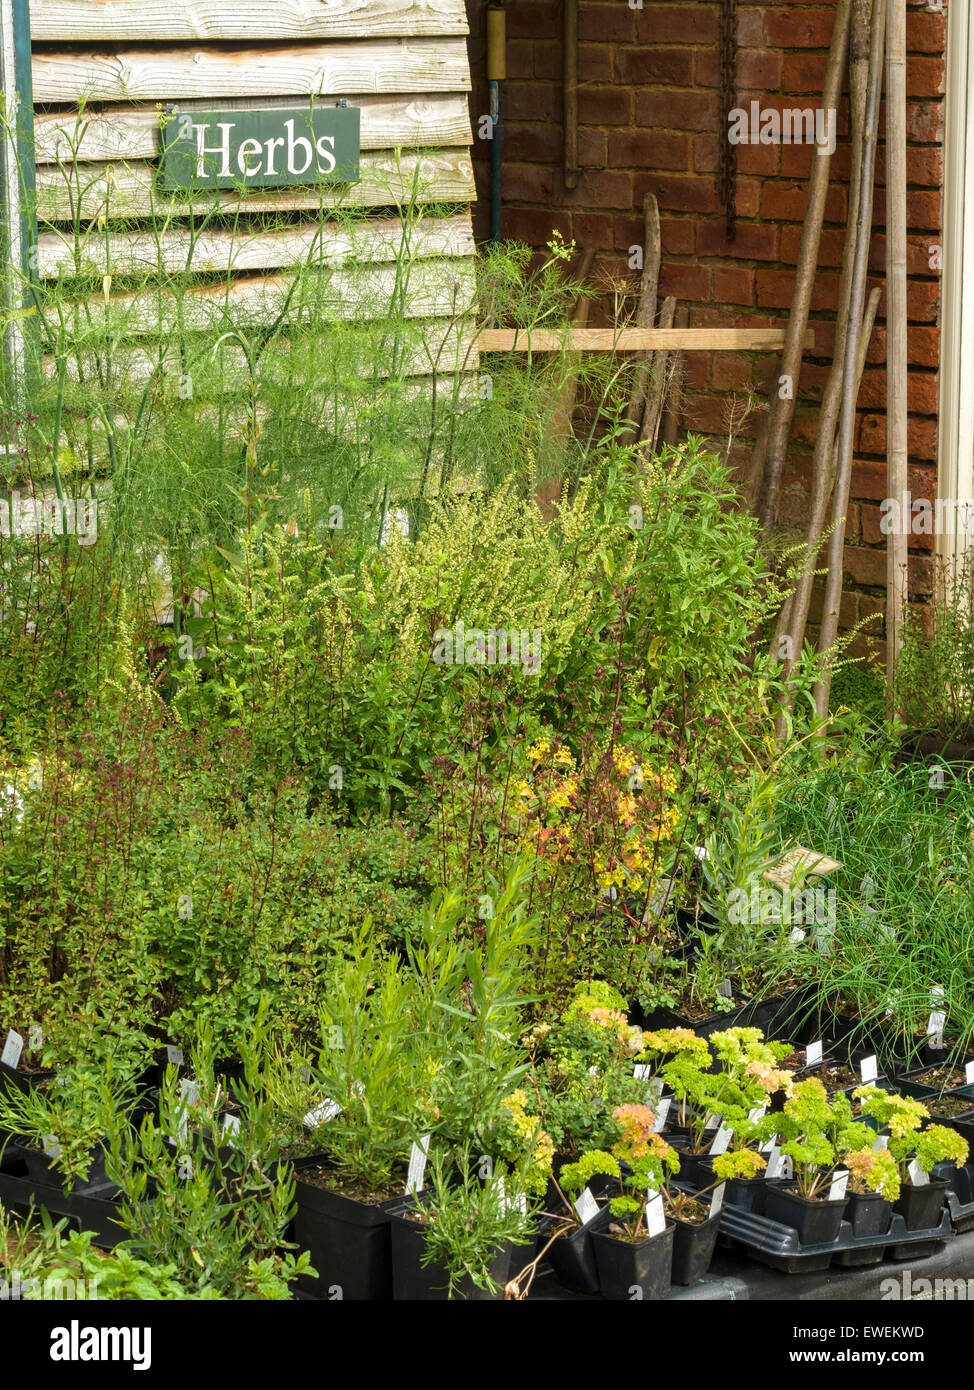 Herb nursery plants for sale, Coton Manor Gardens, Coton, Northamptonshire, England, UK. Stock Photo